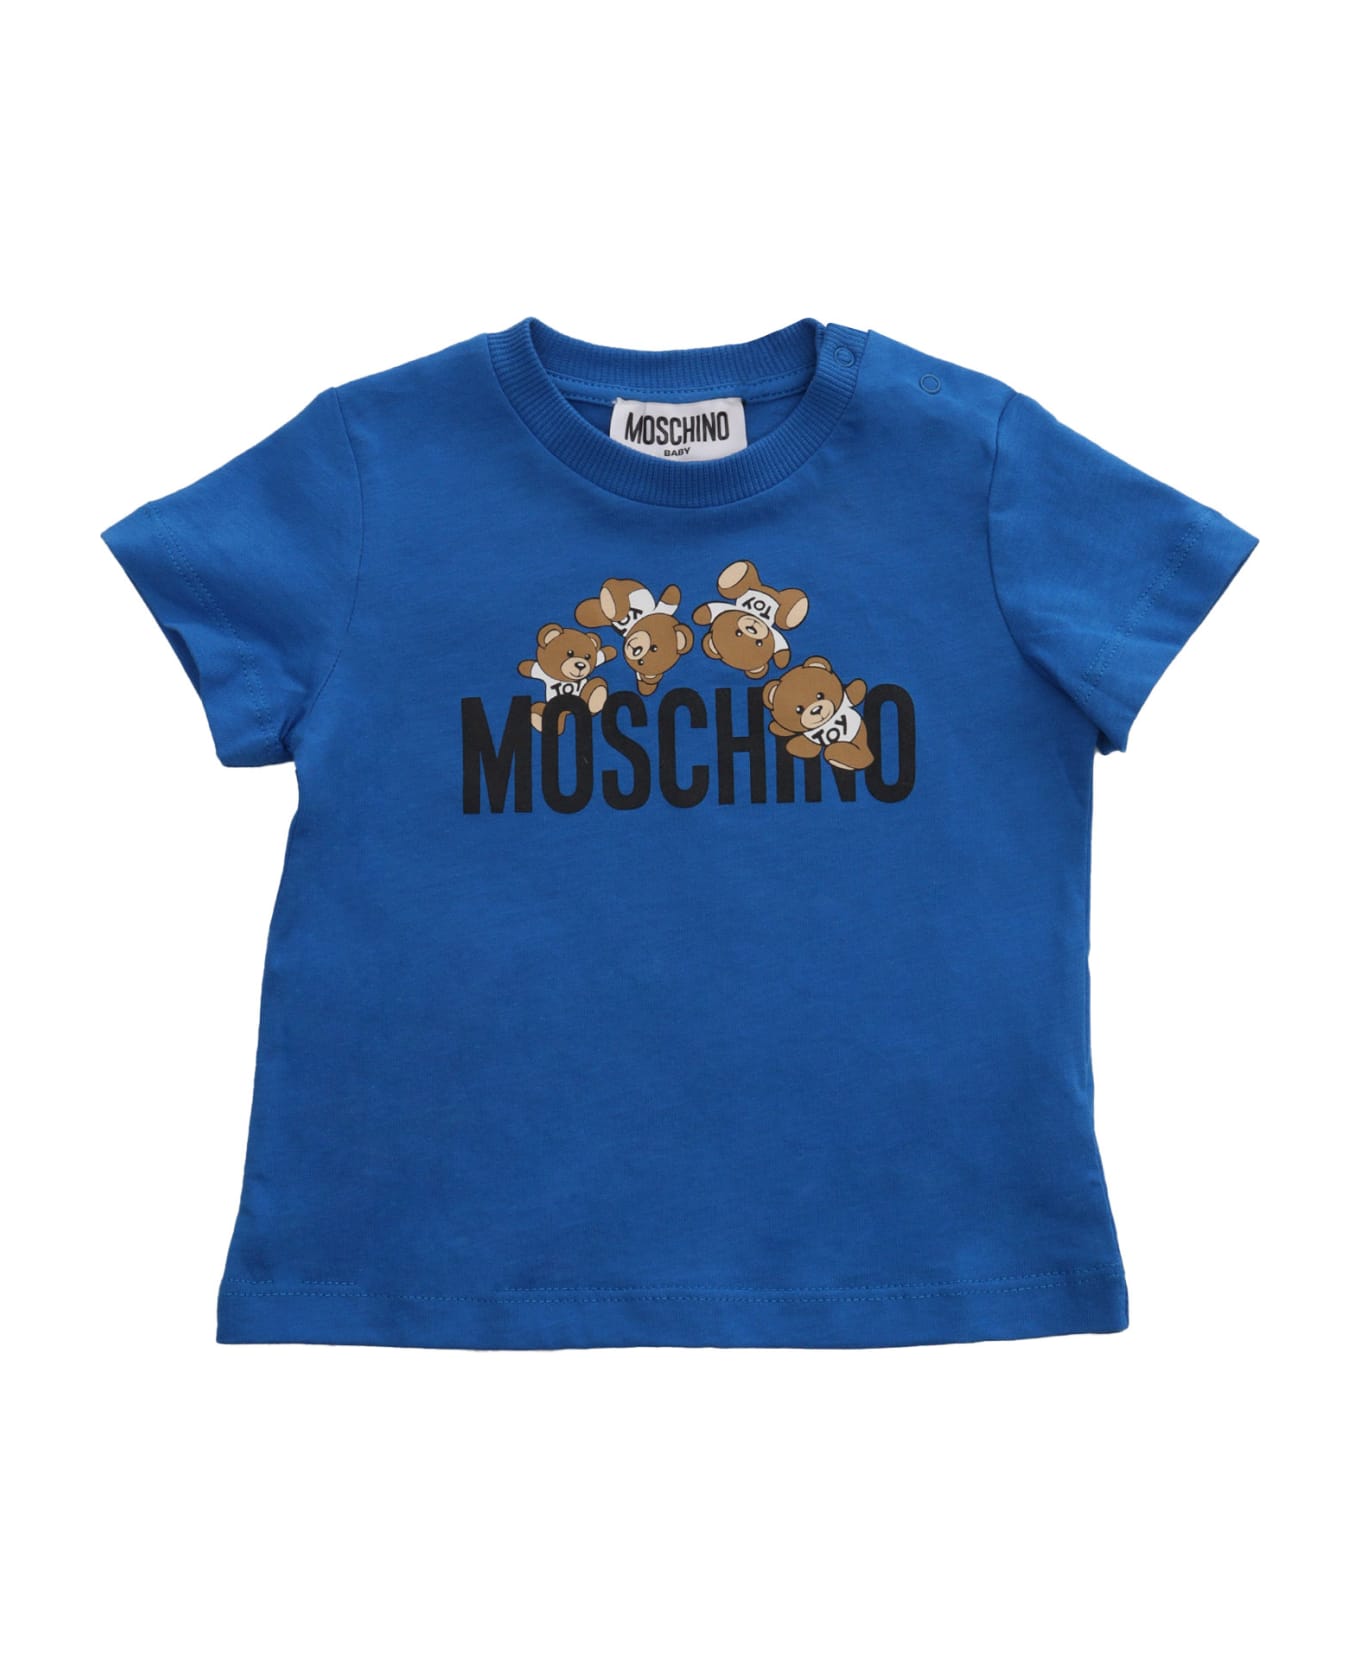 Moschino Blue T-shirt - BLUE